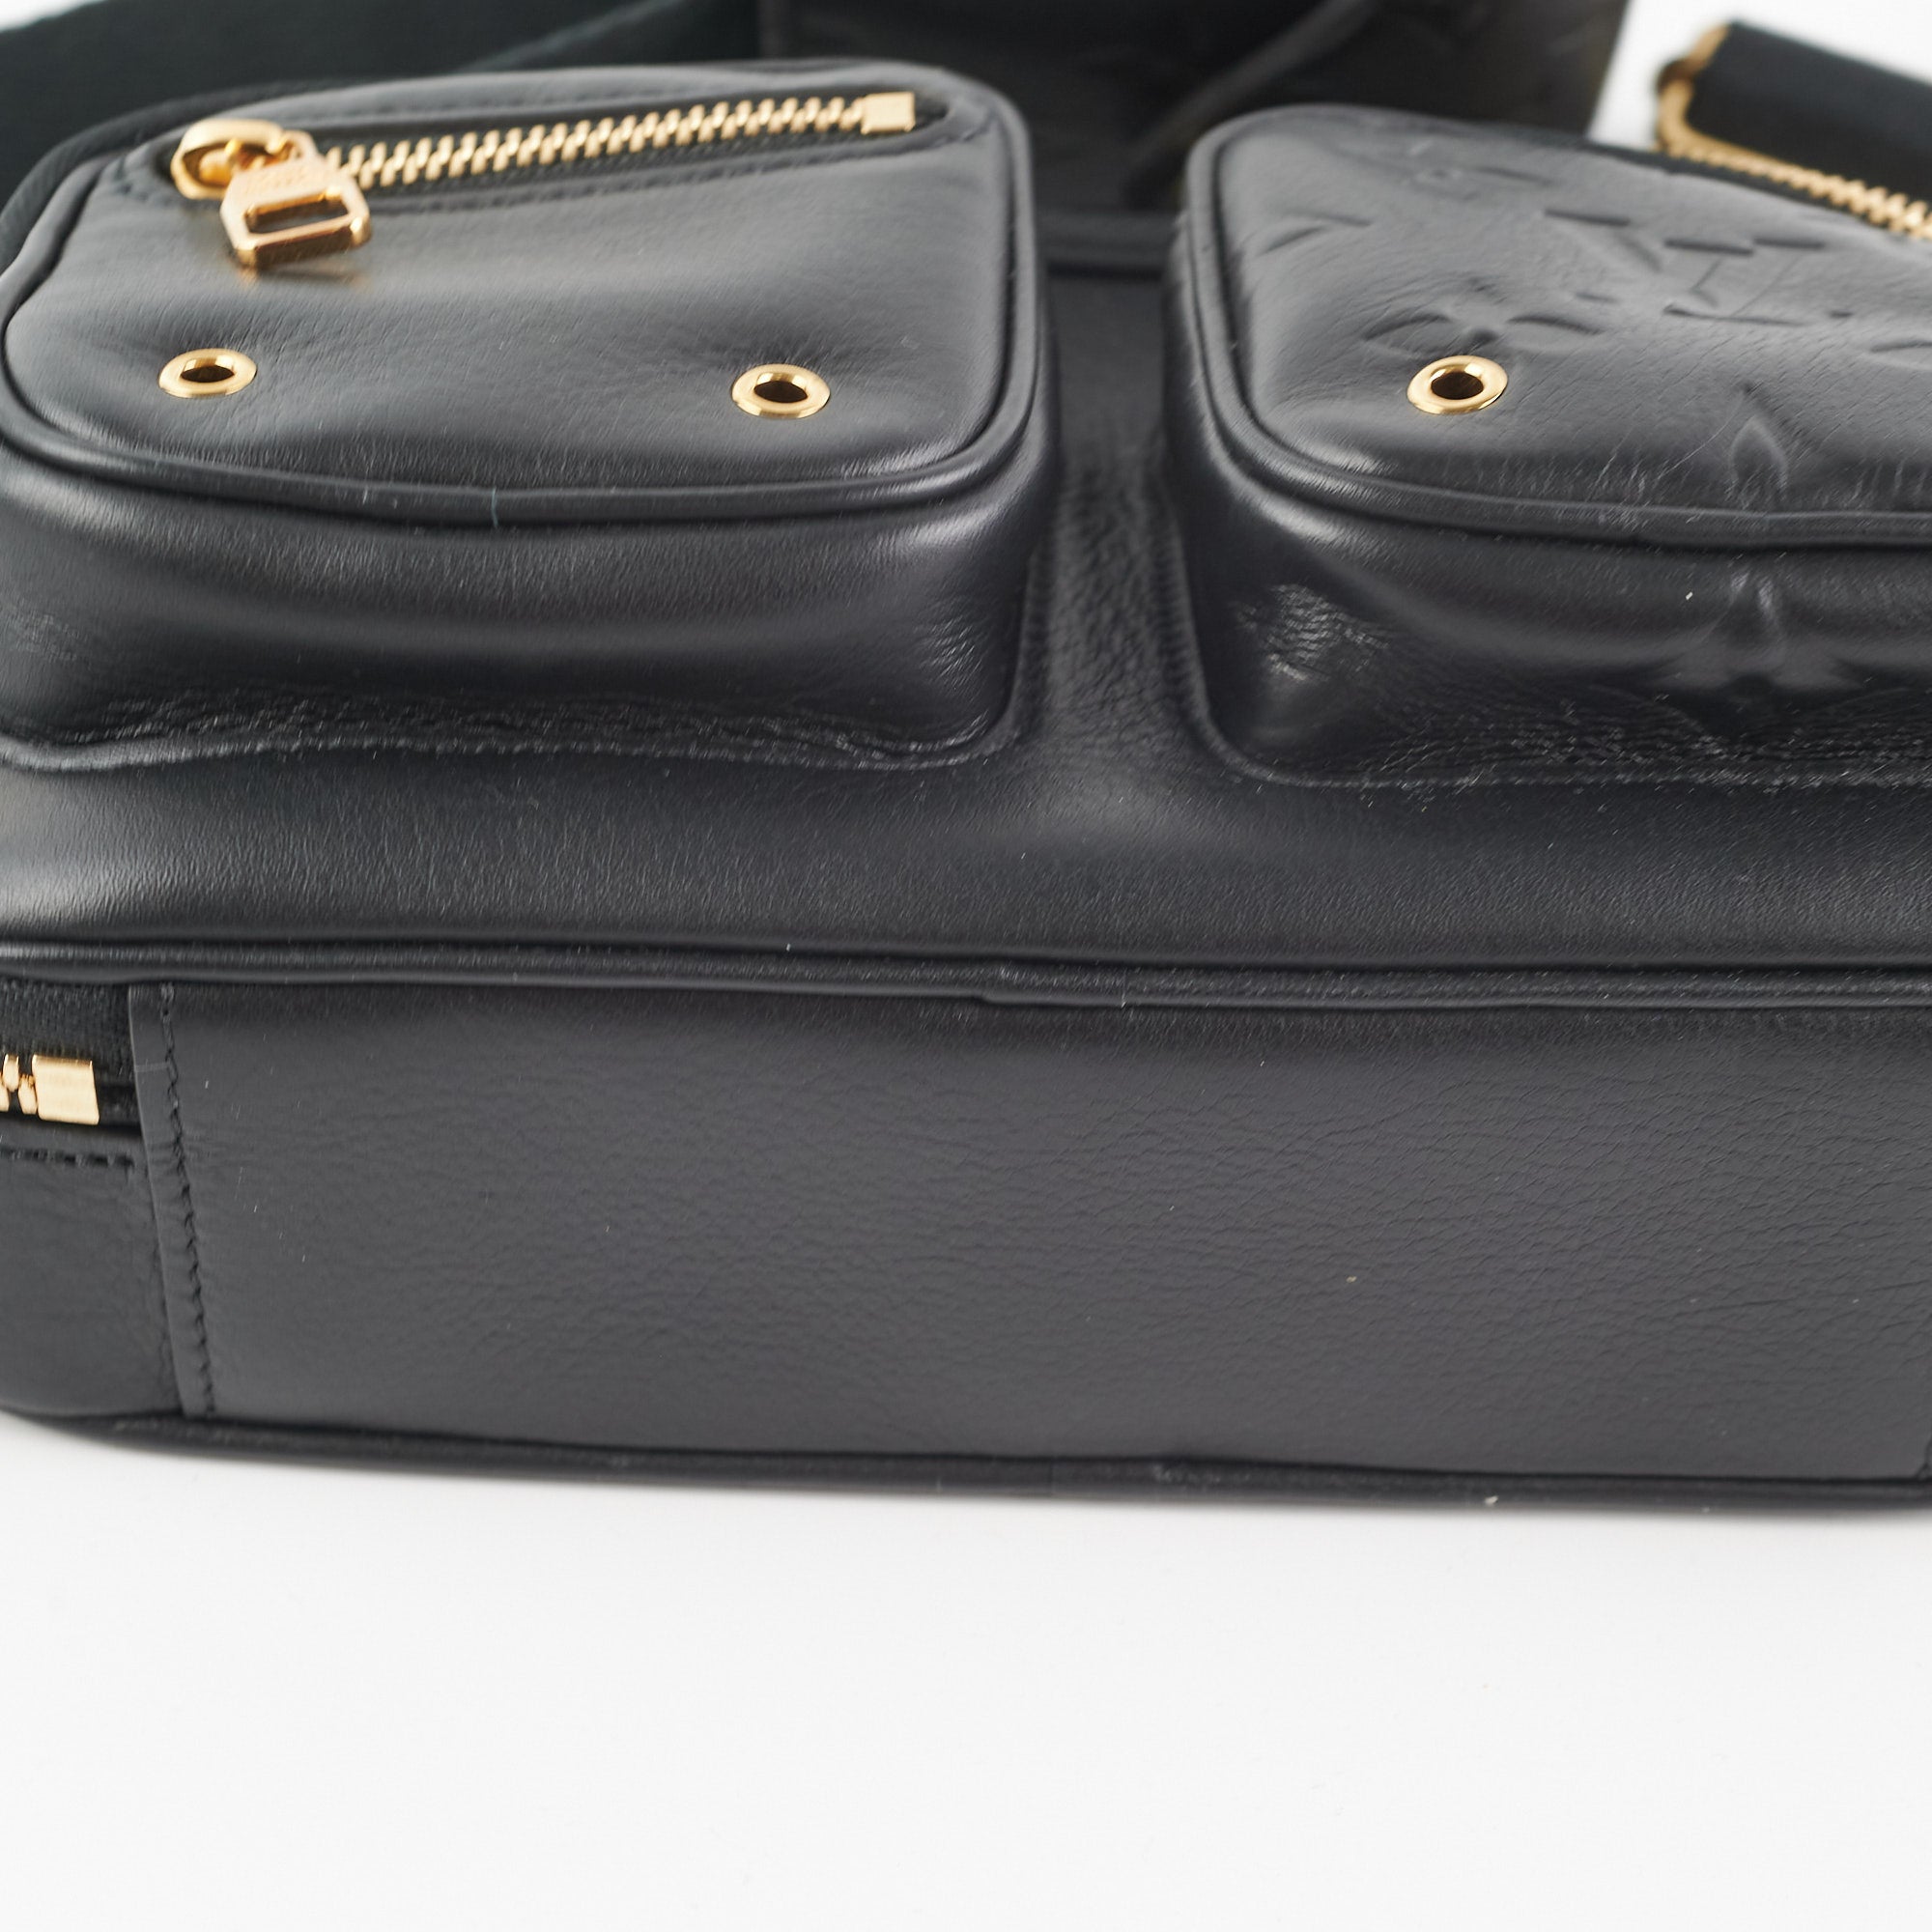 Underrated Crossbody Handbag 🫶🏾 The Louis Vuitton Utility